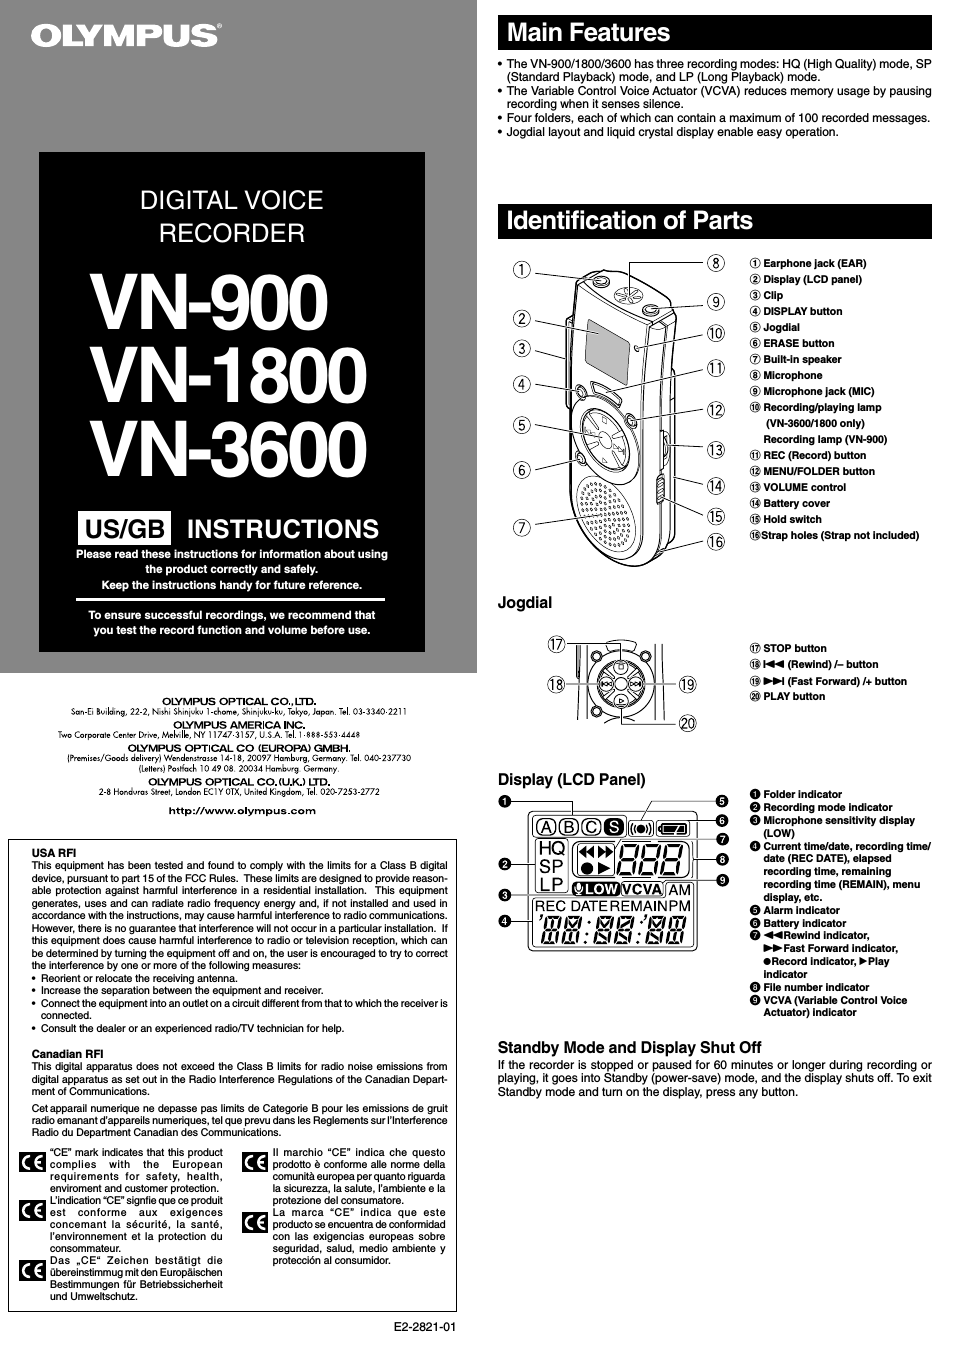 VN-1800 Digital Voice Recorder